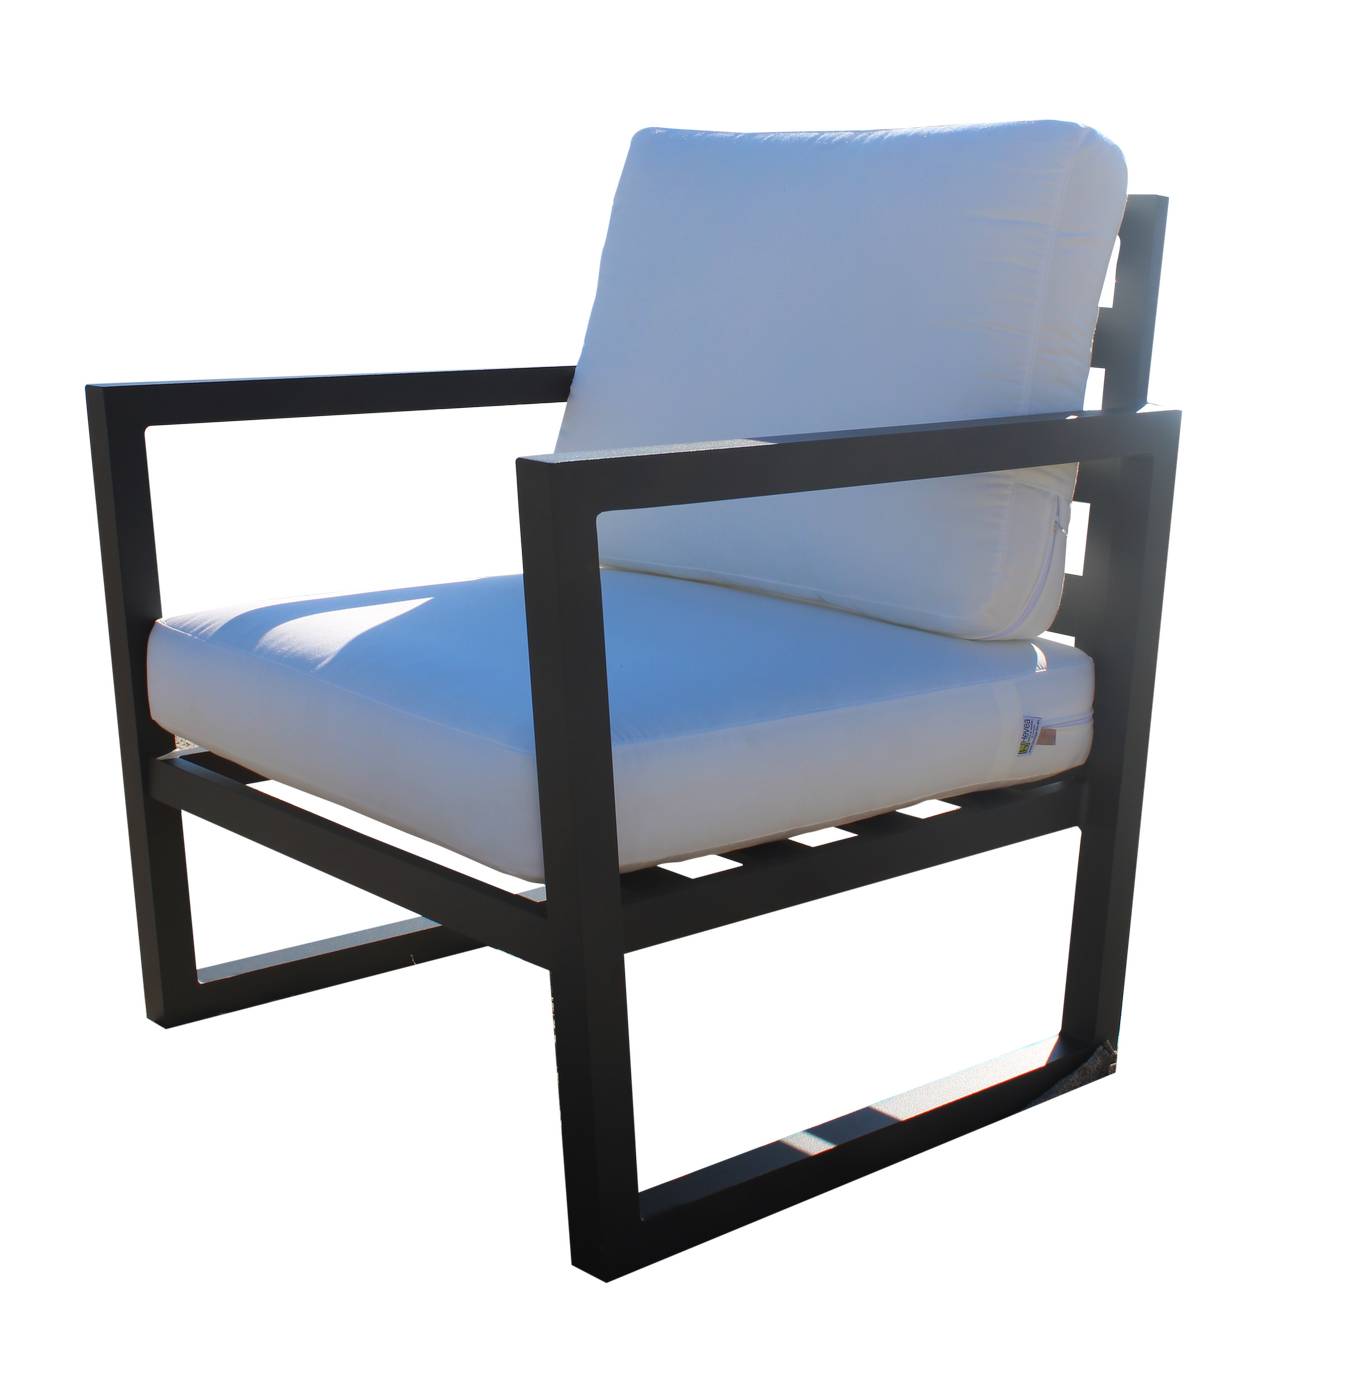 Set Aluminio Alpine-8 - Conjunto de aluminio para exterior: sofá 3 plazas + 2 sillones + mesa de centro. Disponible en color blanco o antracita.